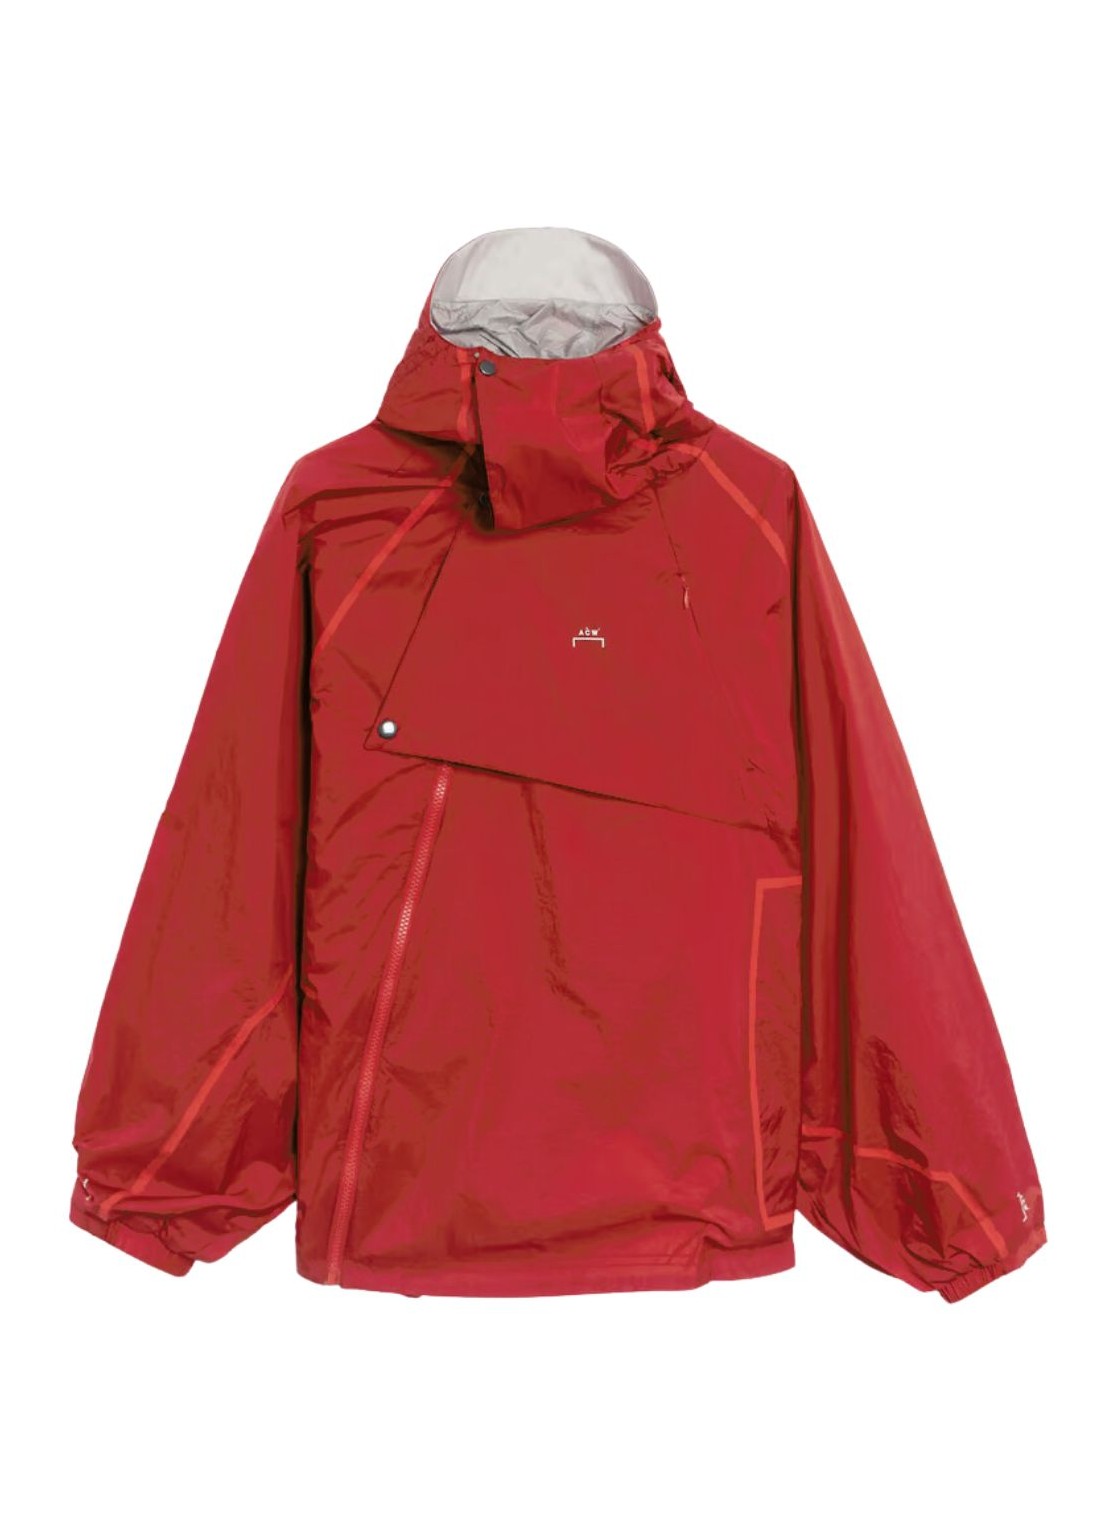 Outerwear converse x a-cold-wall  outerwear manwind jacket - 10026874 a01 talla XL
 